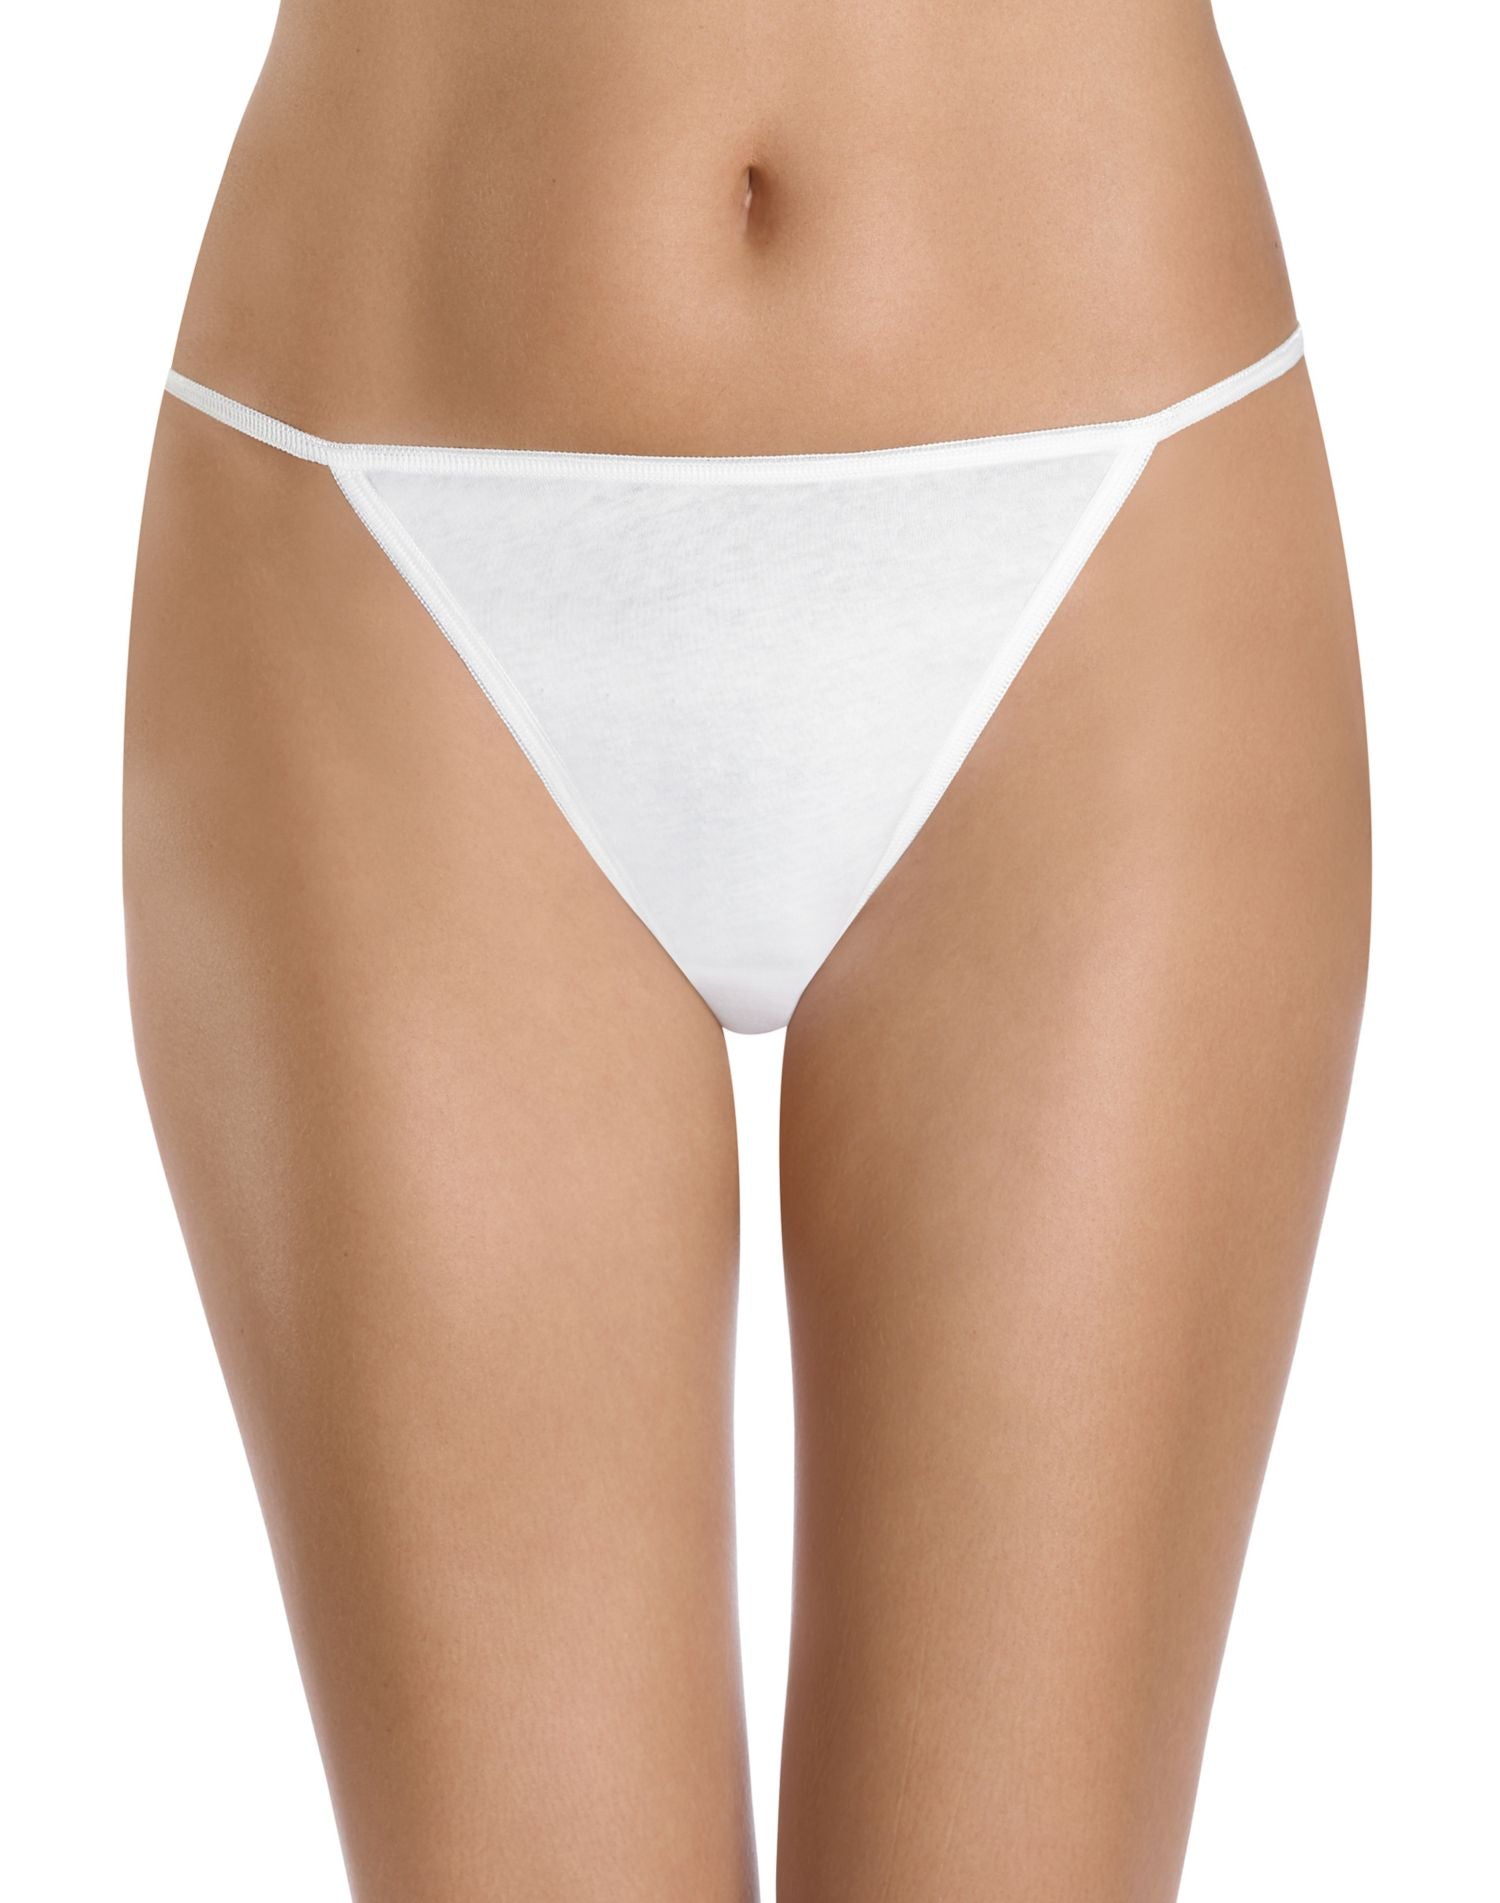 PP45AS - Hanes Women's Cotton String Bikini 6 pack